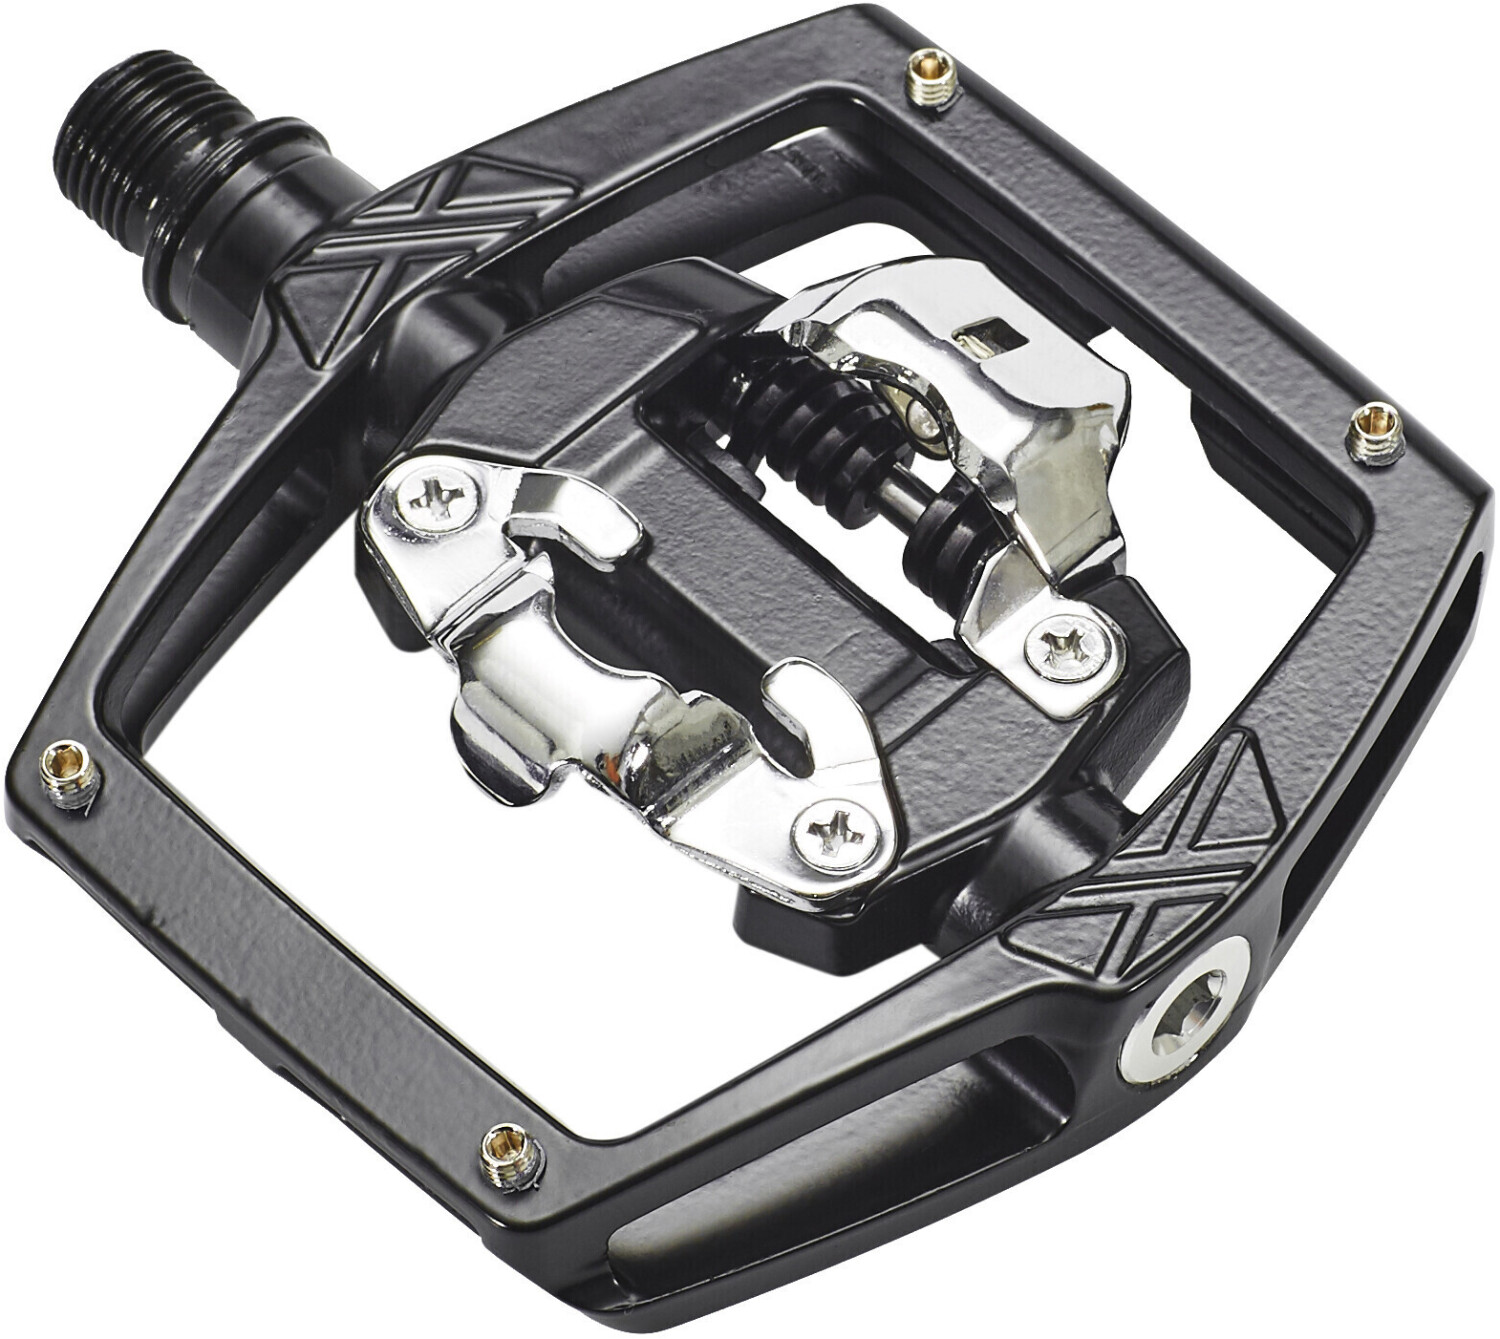 XLC Pedal Pd S24 One Size Black ab 40,79 € | Preisvergleich bei